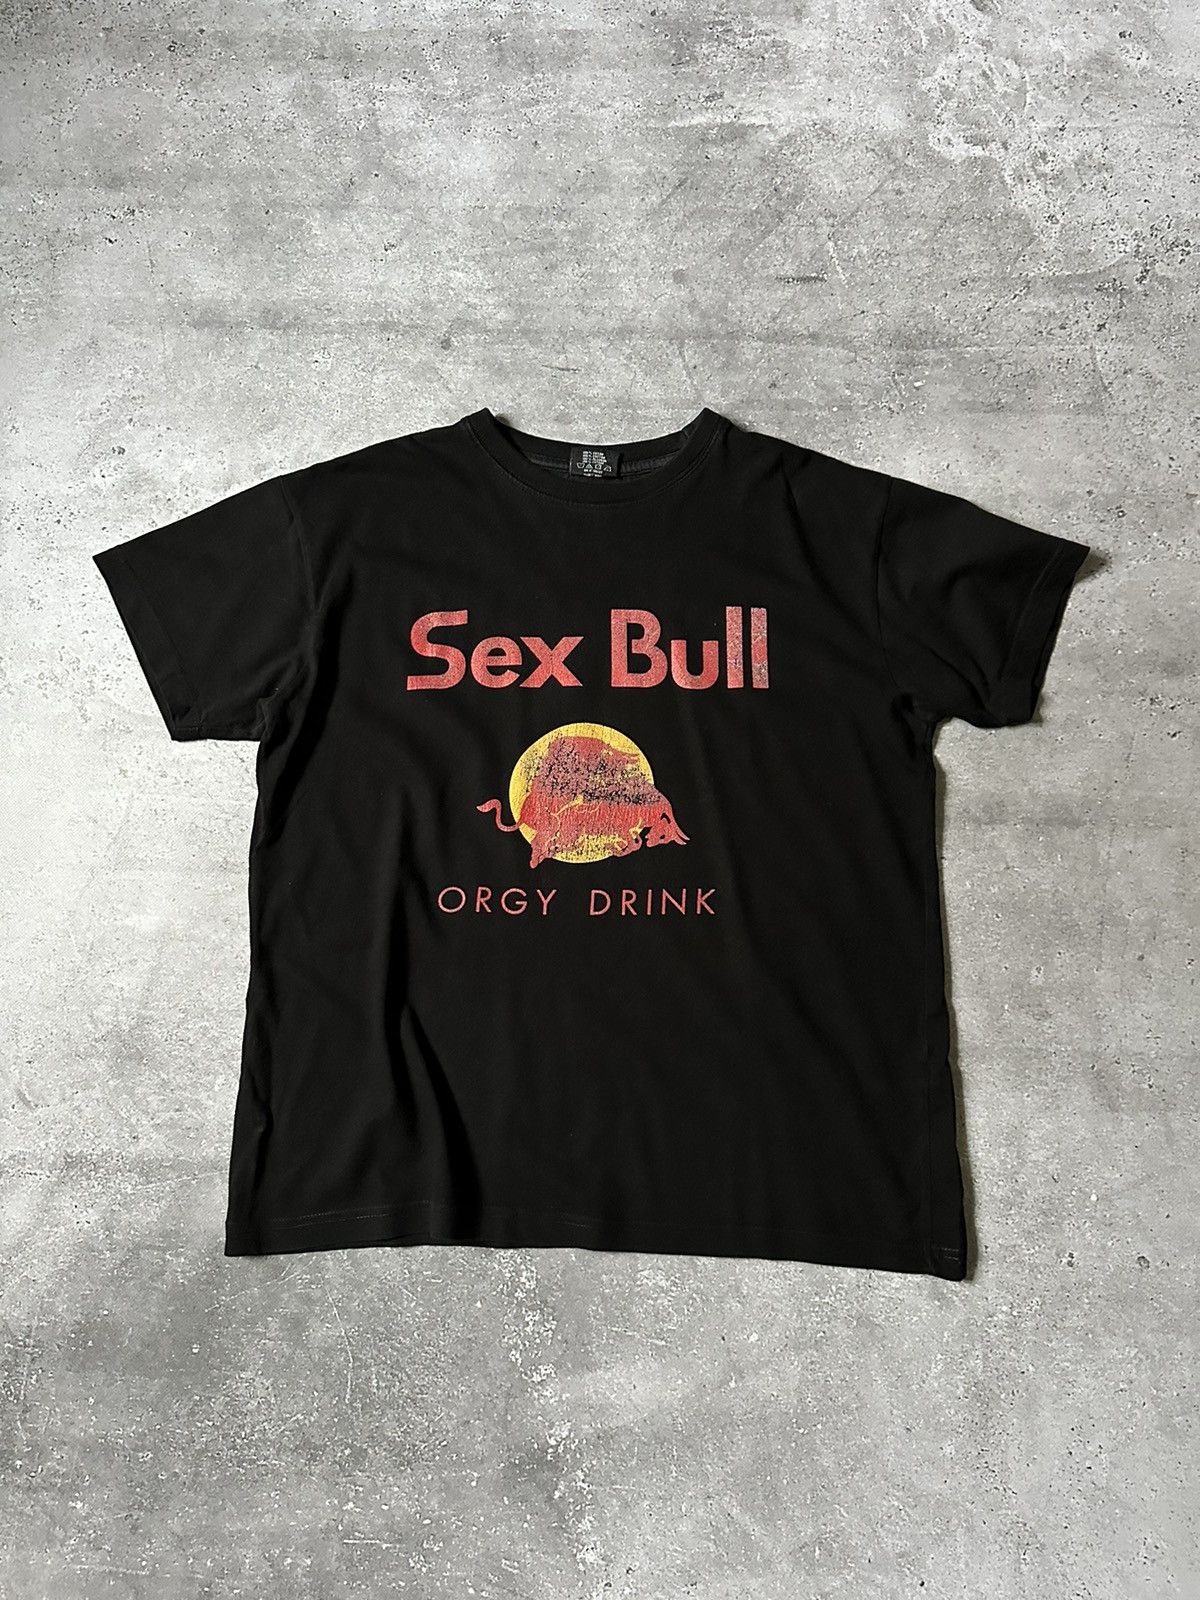 Sexbull - Vintage Vintage Y2K Sex Bull 'Orgy Drink' Art T-Shirt | Grailed